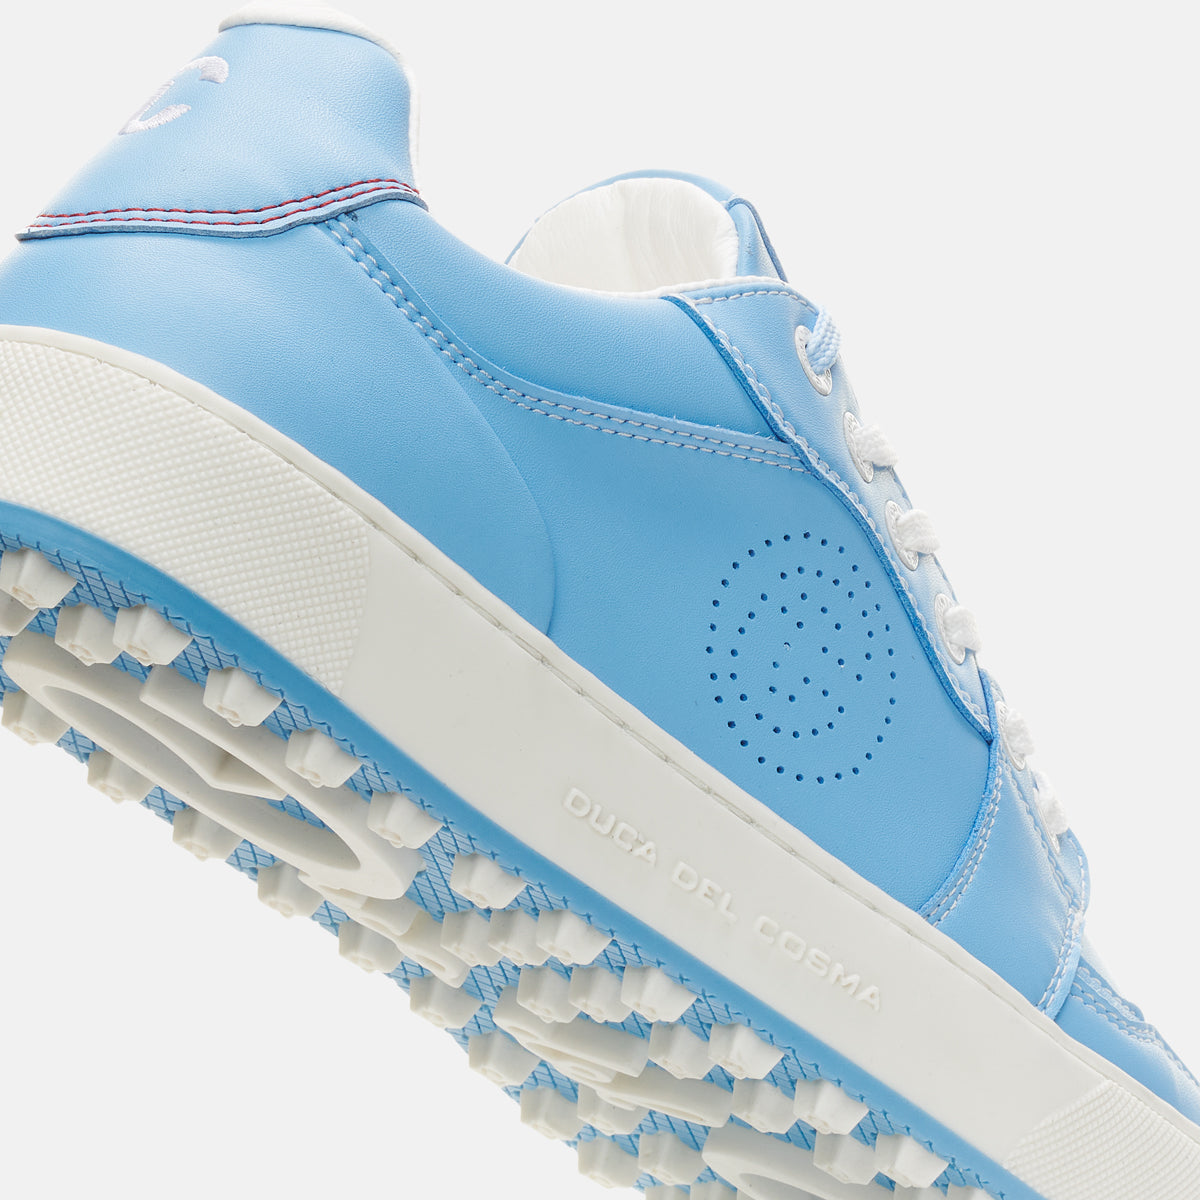 womens blue golf shoes